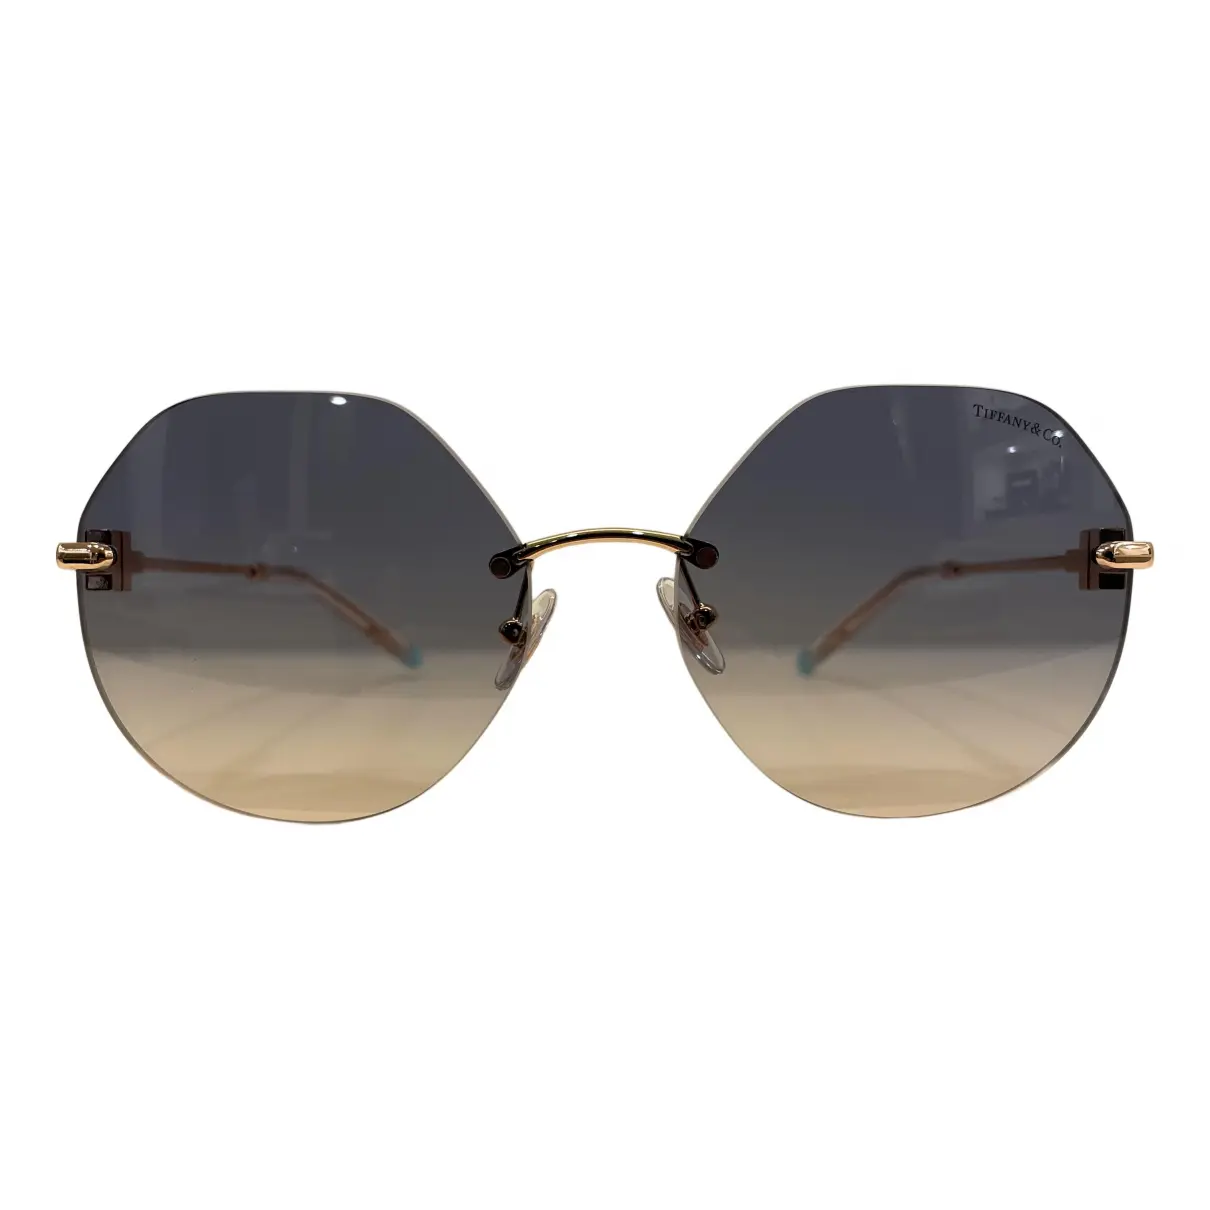 Sunglasses Tiffany & Co